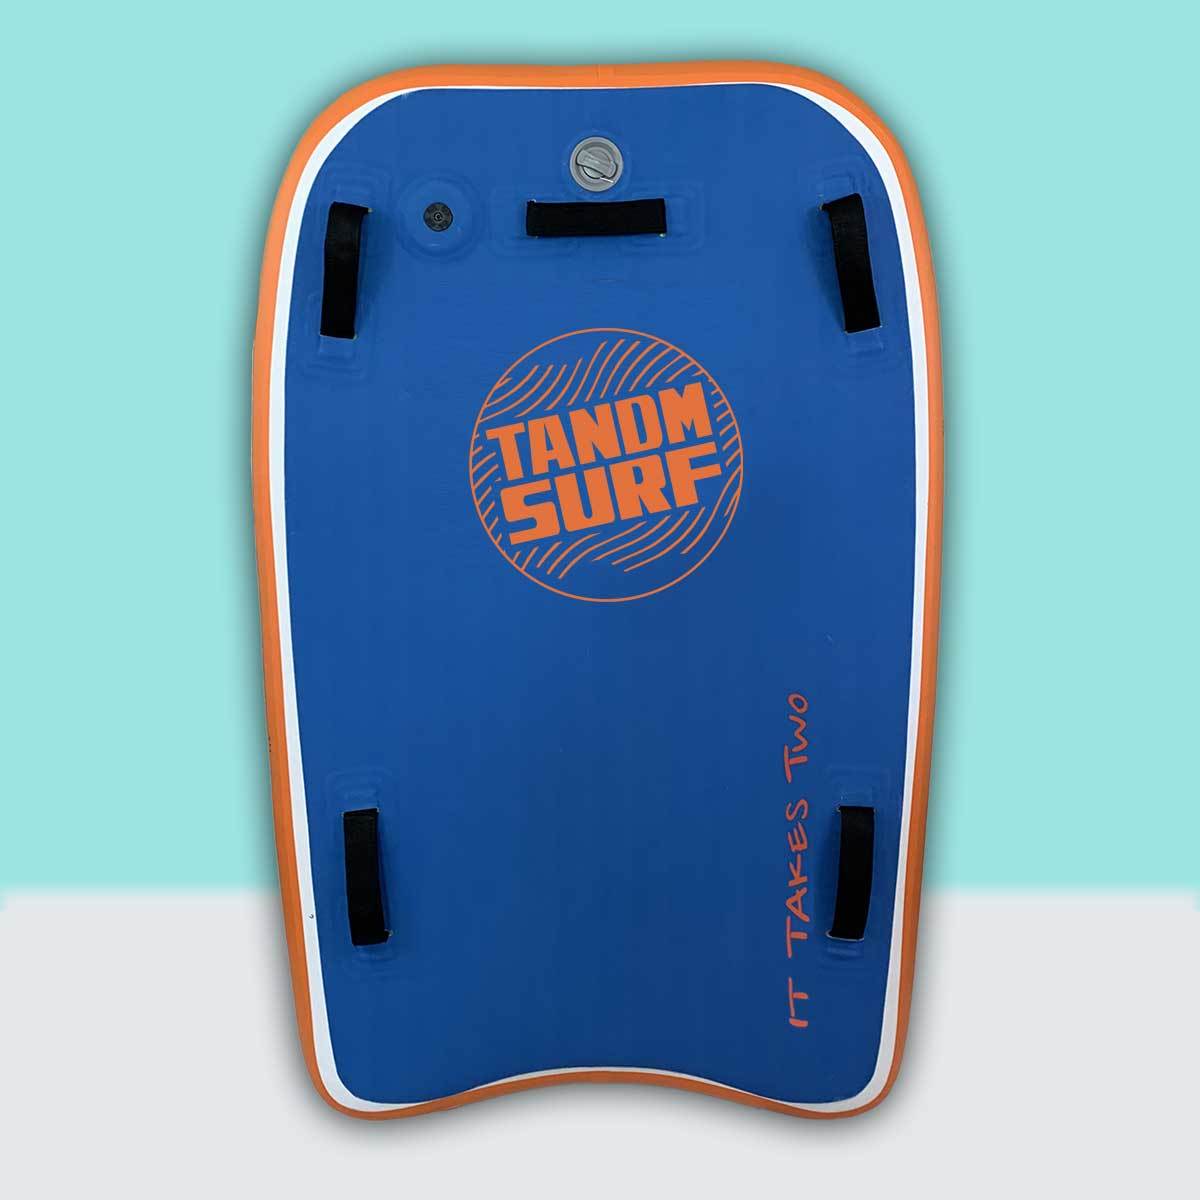 TANDM Surf Bodyboard - 10 Pack Wholesale